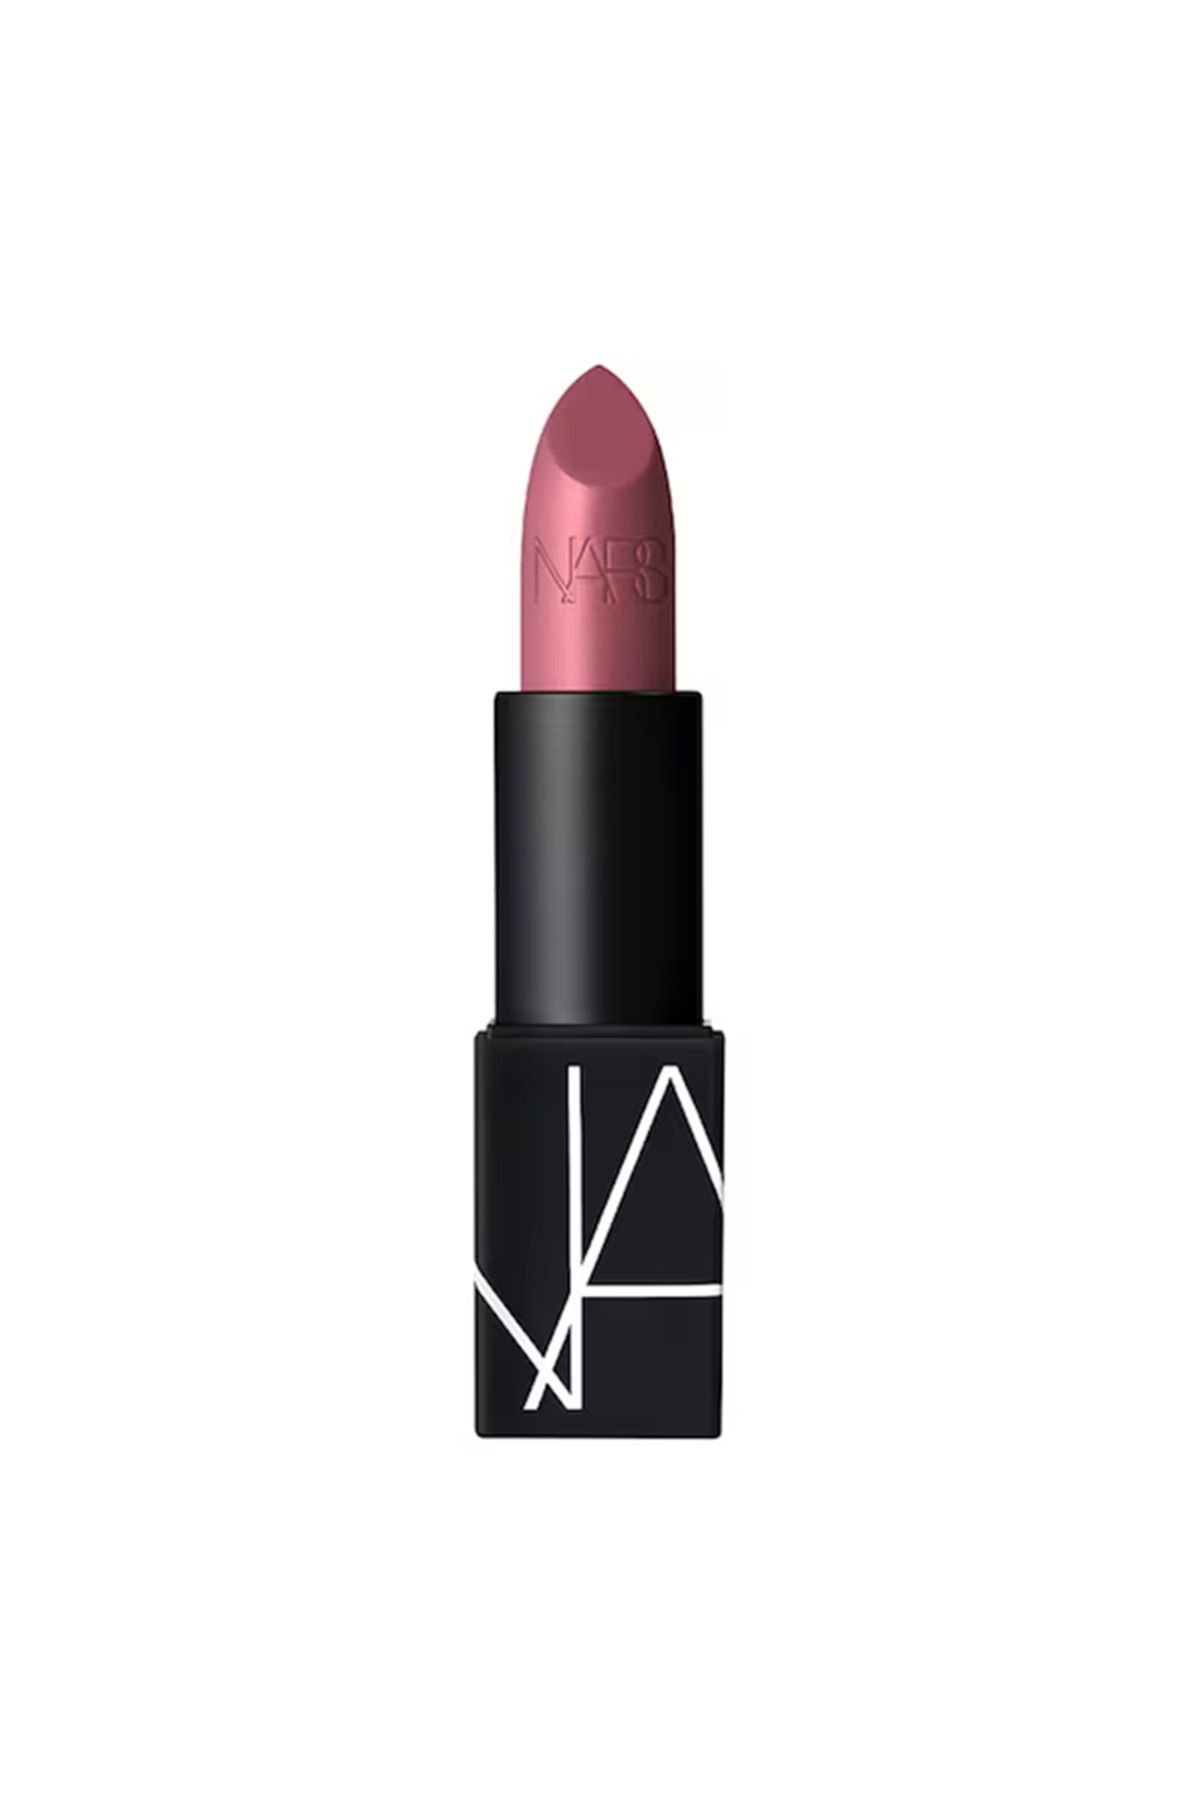 Nars - Ruj - Iconic Lipstick - Hot kiss (3,5 g)